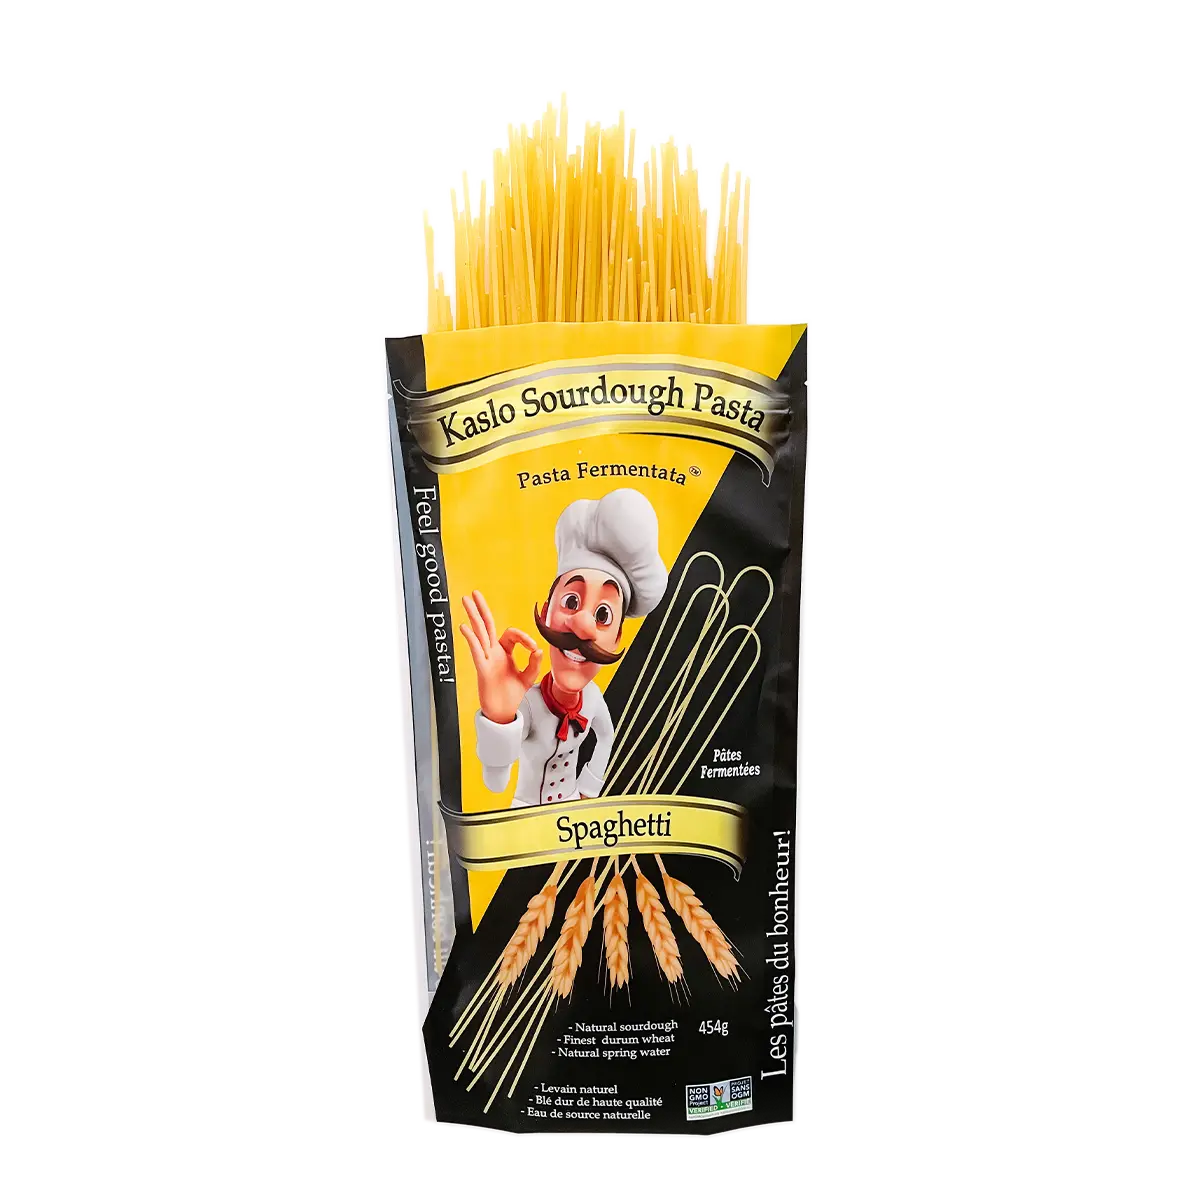 Kaslo Sourdough Pasta - Spaghetti 454g